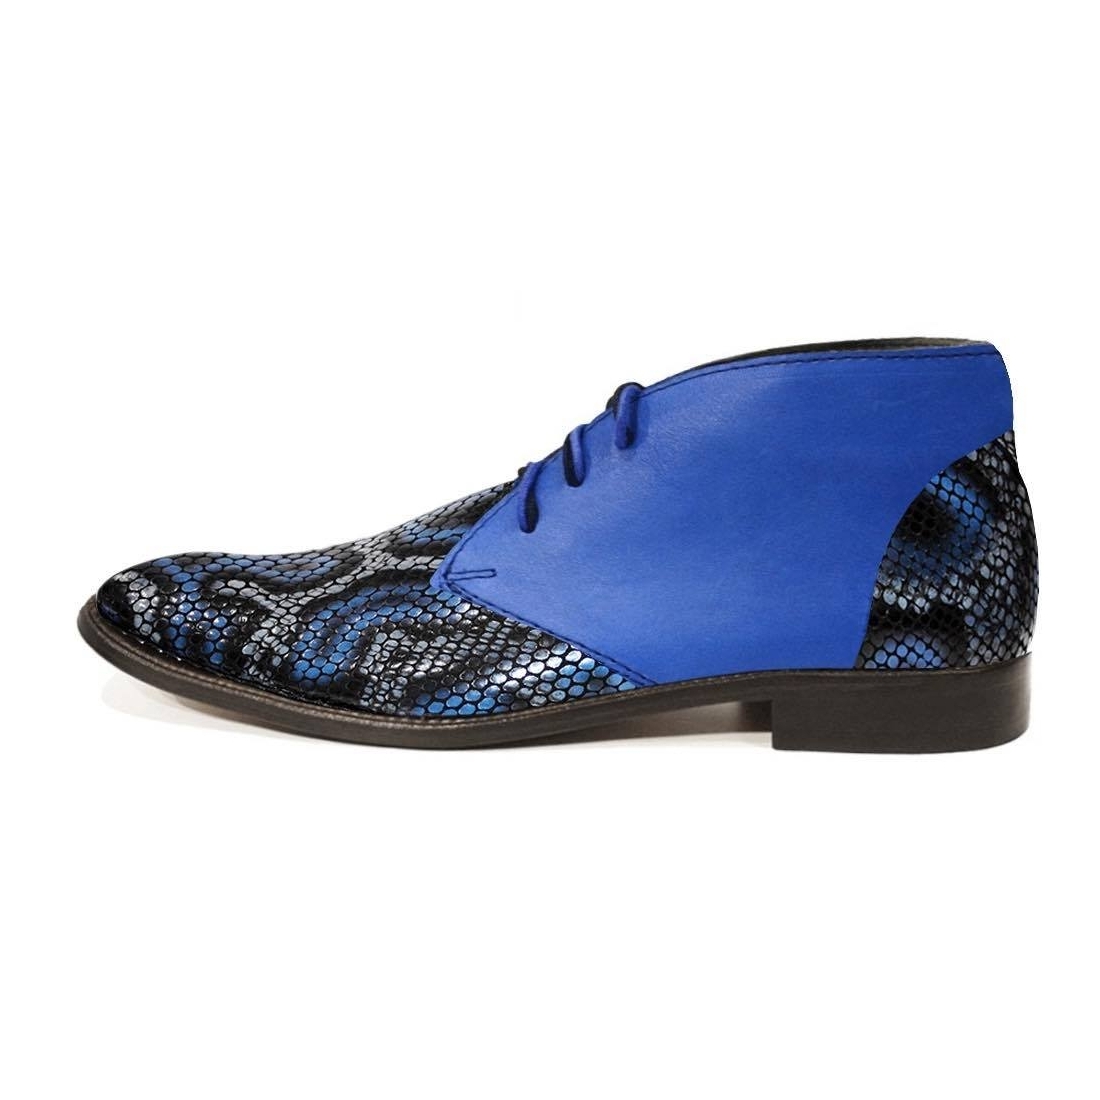 Modello Serpentto - чукка мужские - Handmade Colorful Italian Leather Shoes